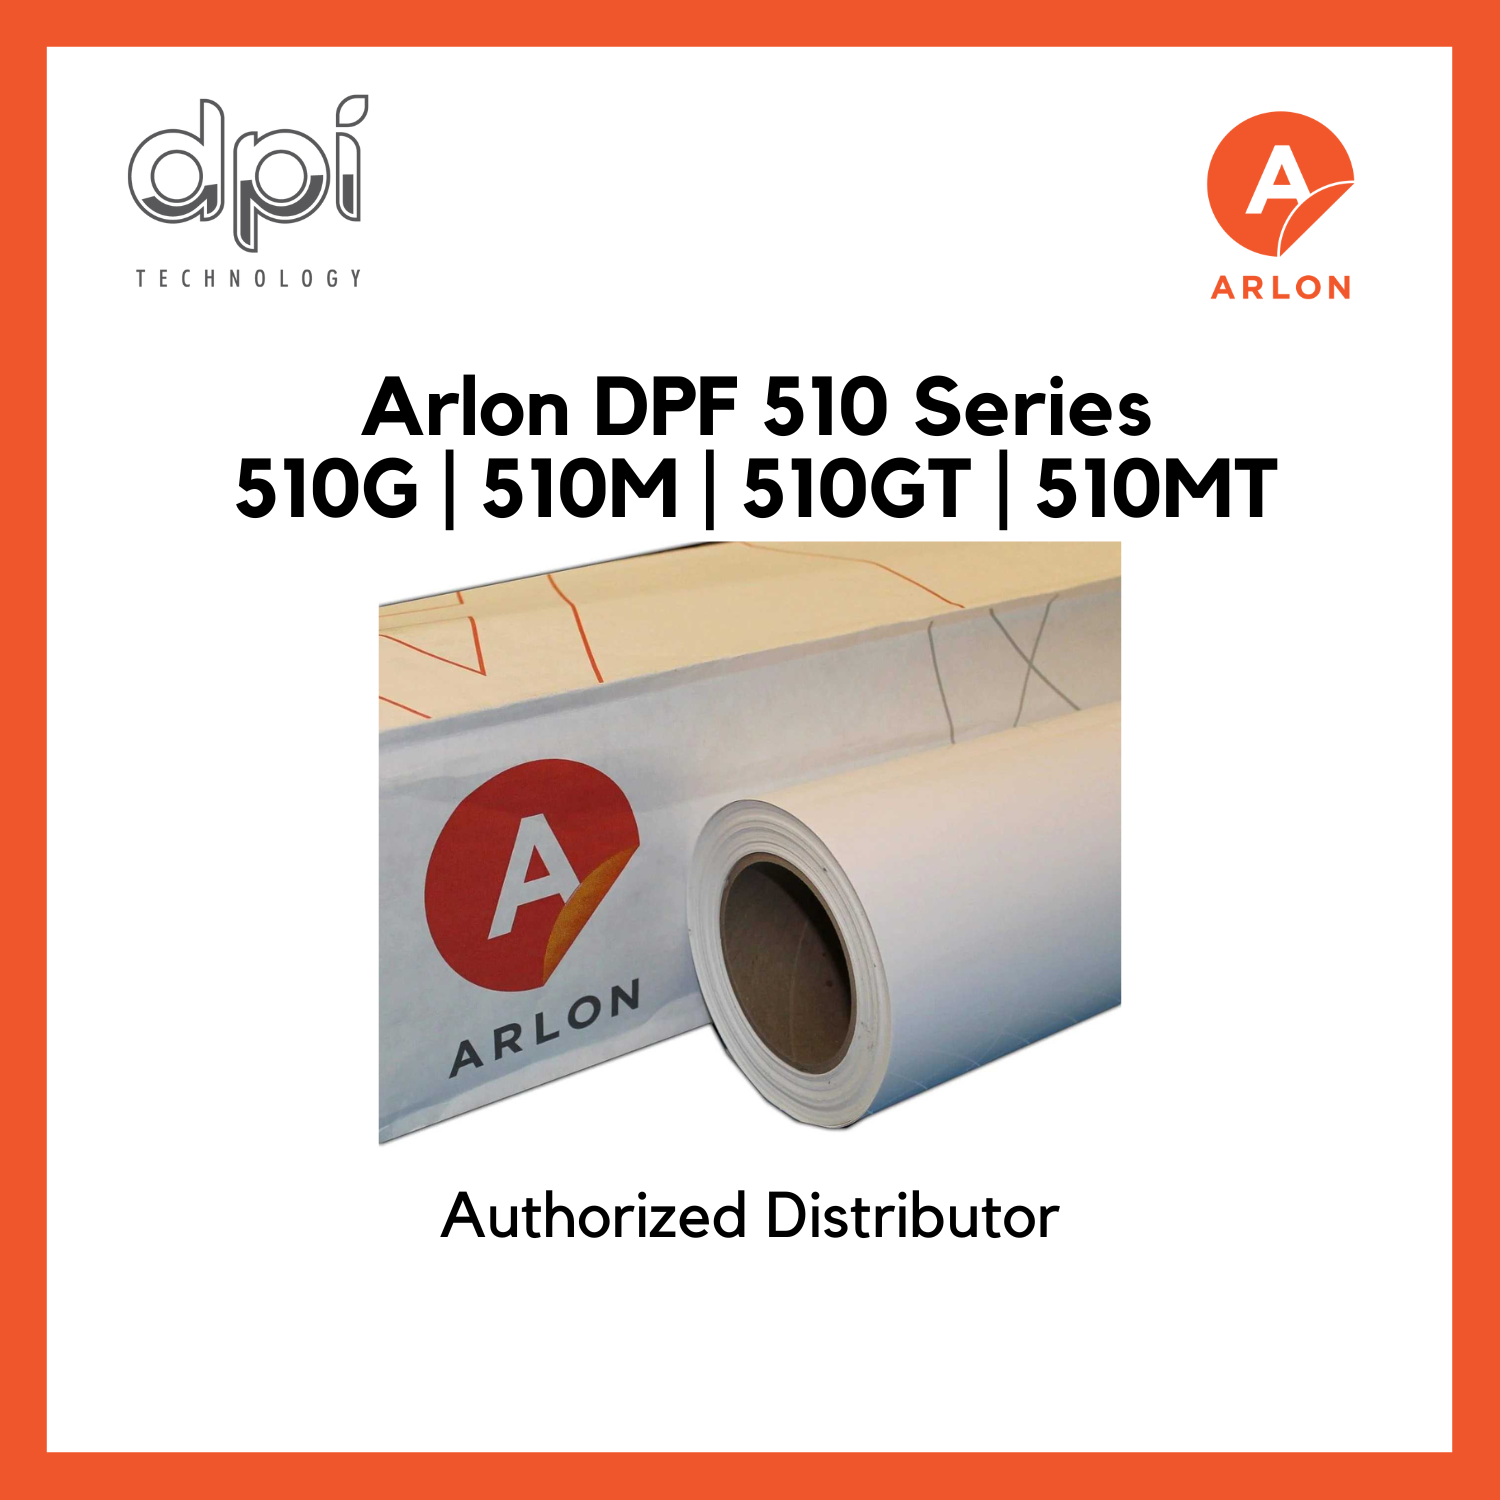 Arlon DPF 510 Series